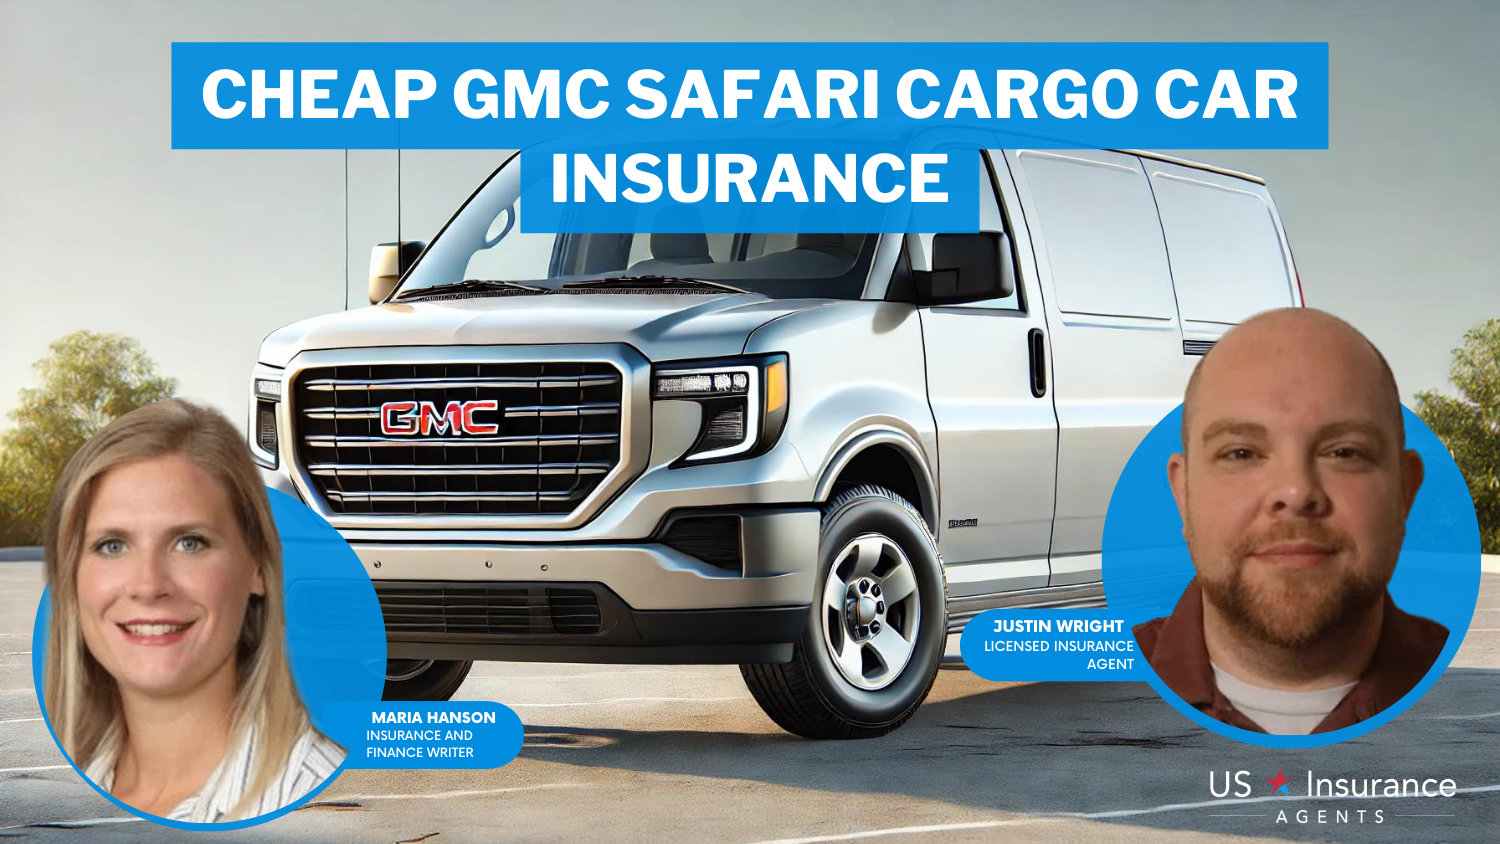 cheap GMC Safari Cargo car insurance: AAA, Mercury, and Safeco